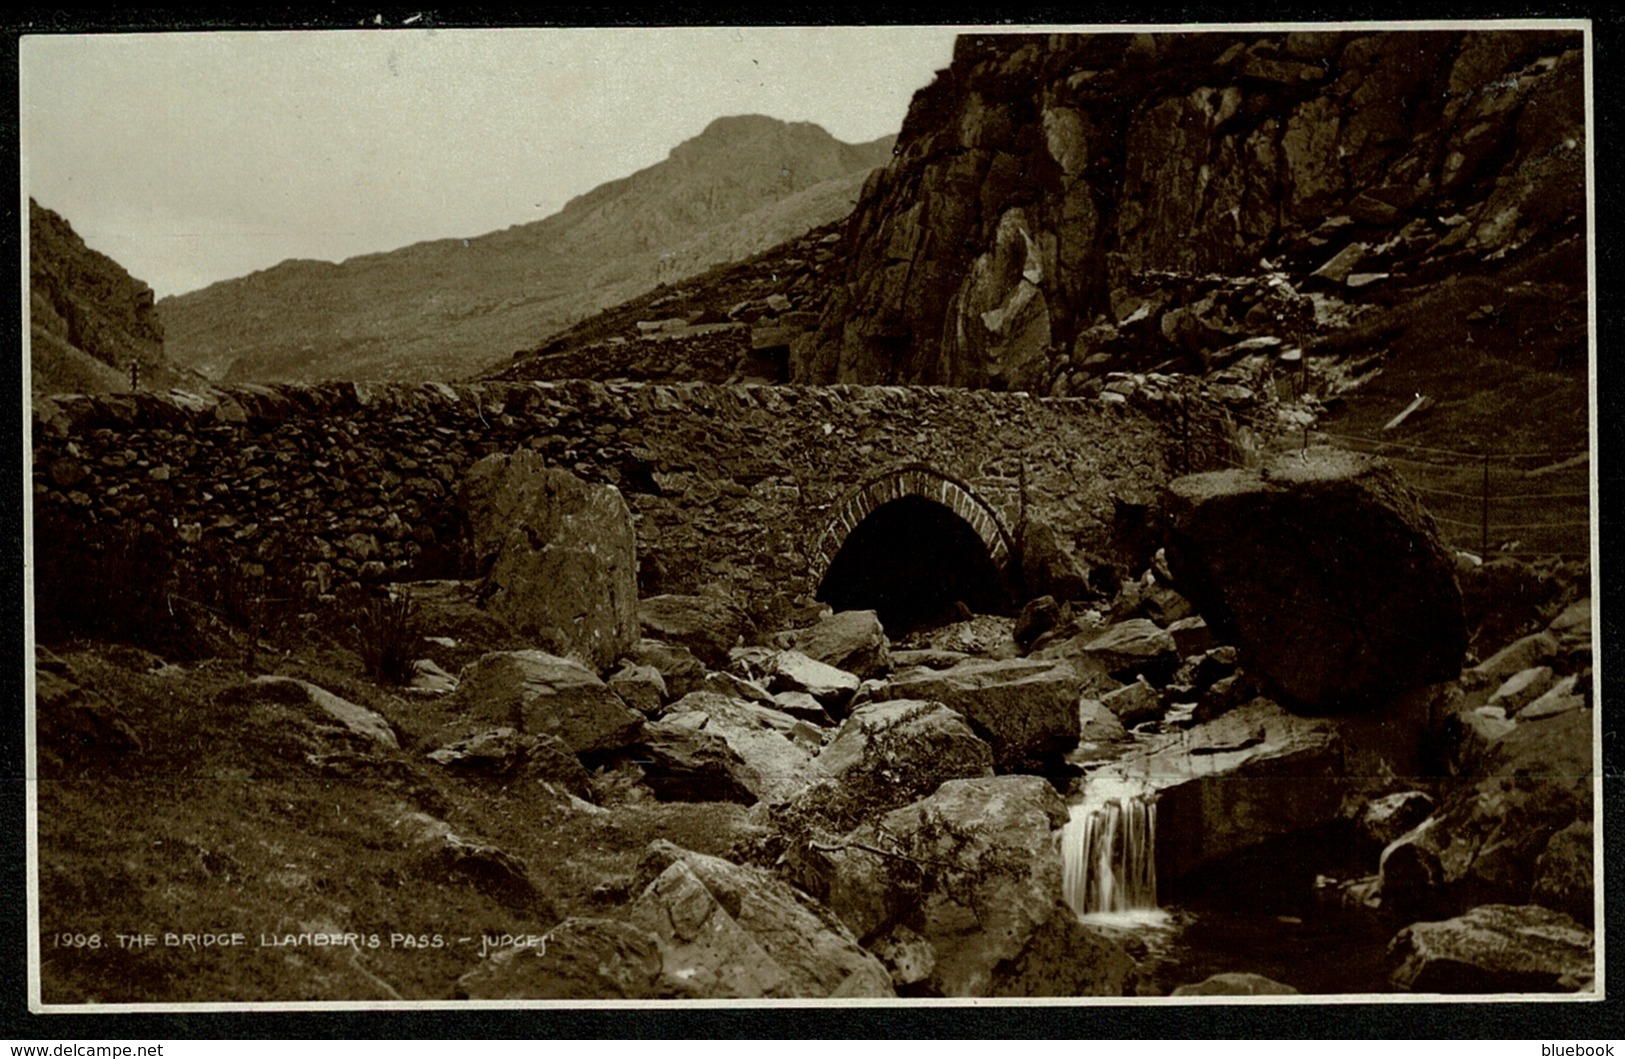 Ref 1268 - Judges Real Photo Postcard - The Bridge Llanberis Pass Snowdonia - Caernarvonshire Wales - Caernarvonshire